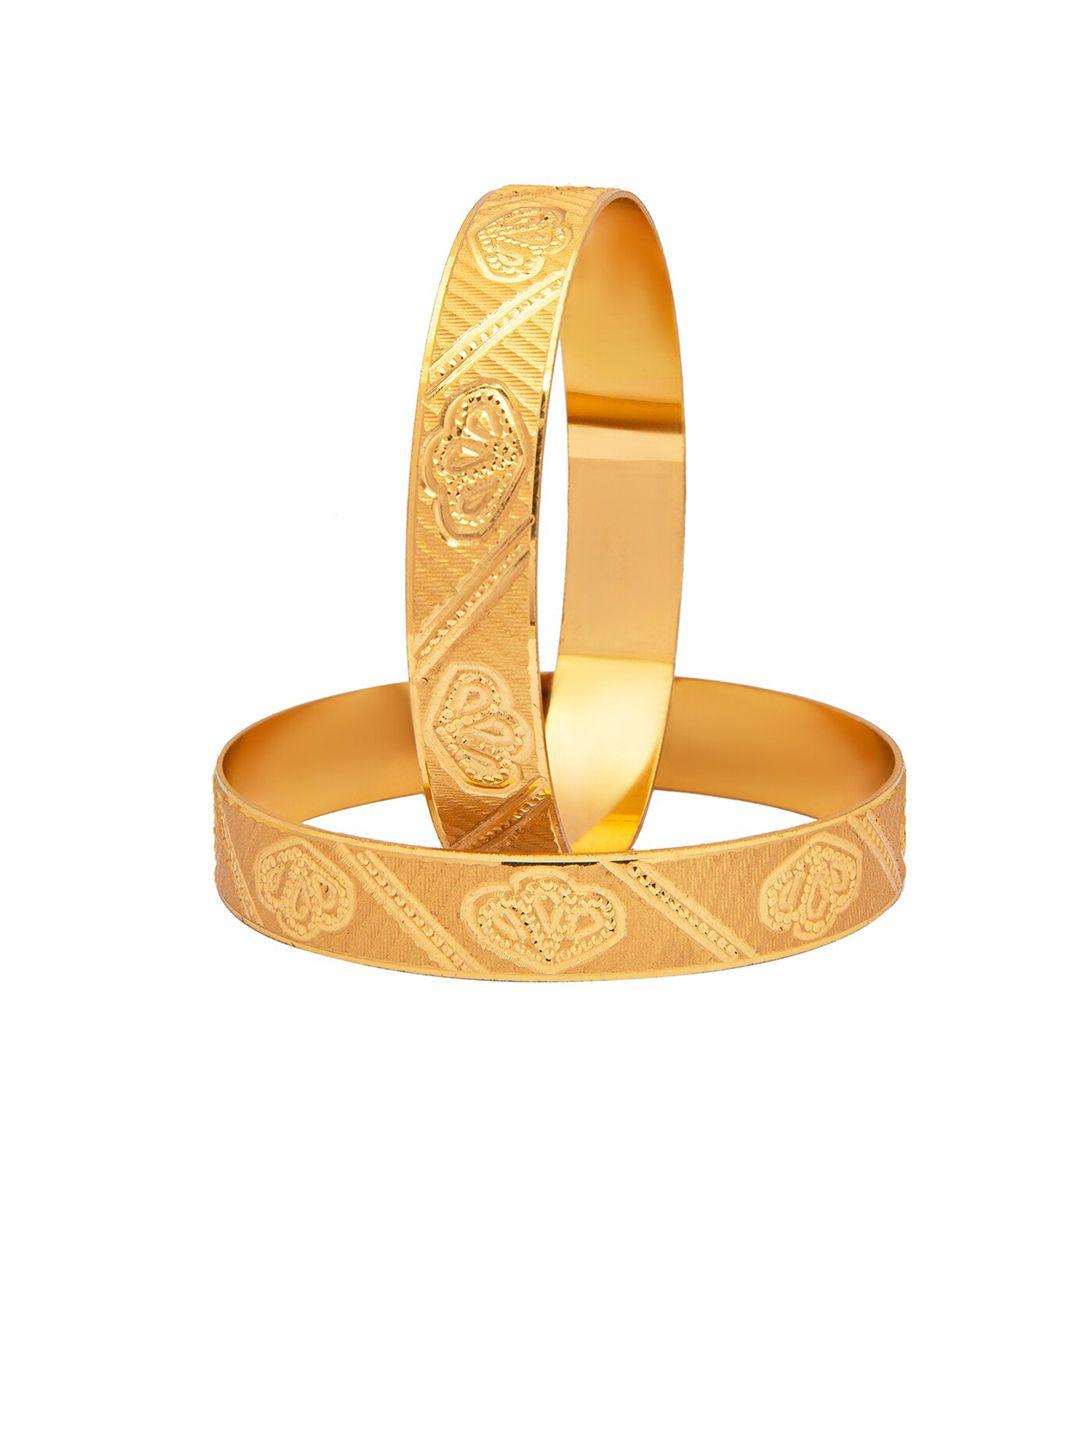 shining jewel - by shivansh set of 2 gold-plated & textured bangles